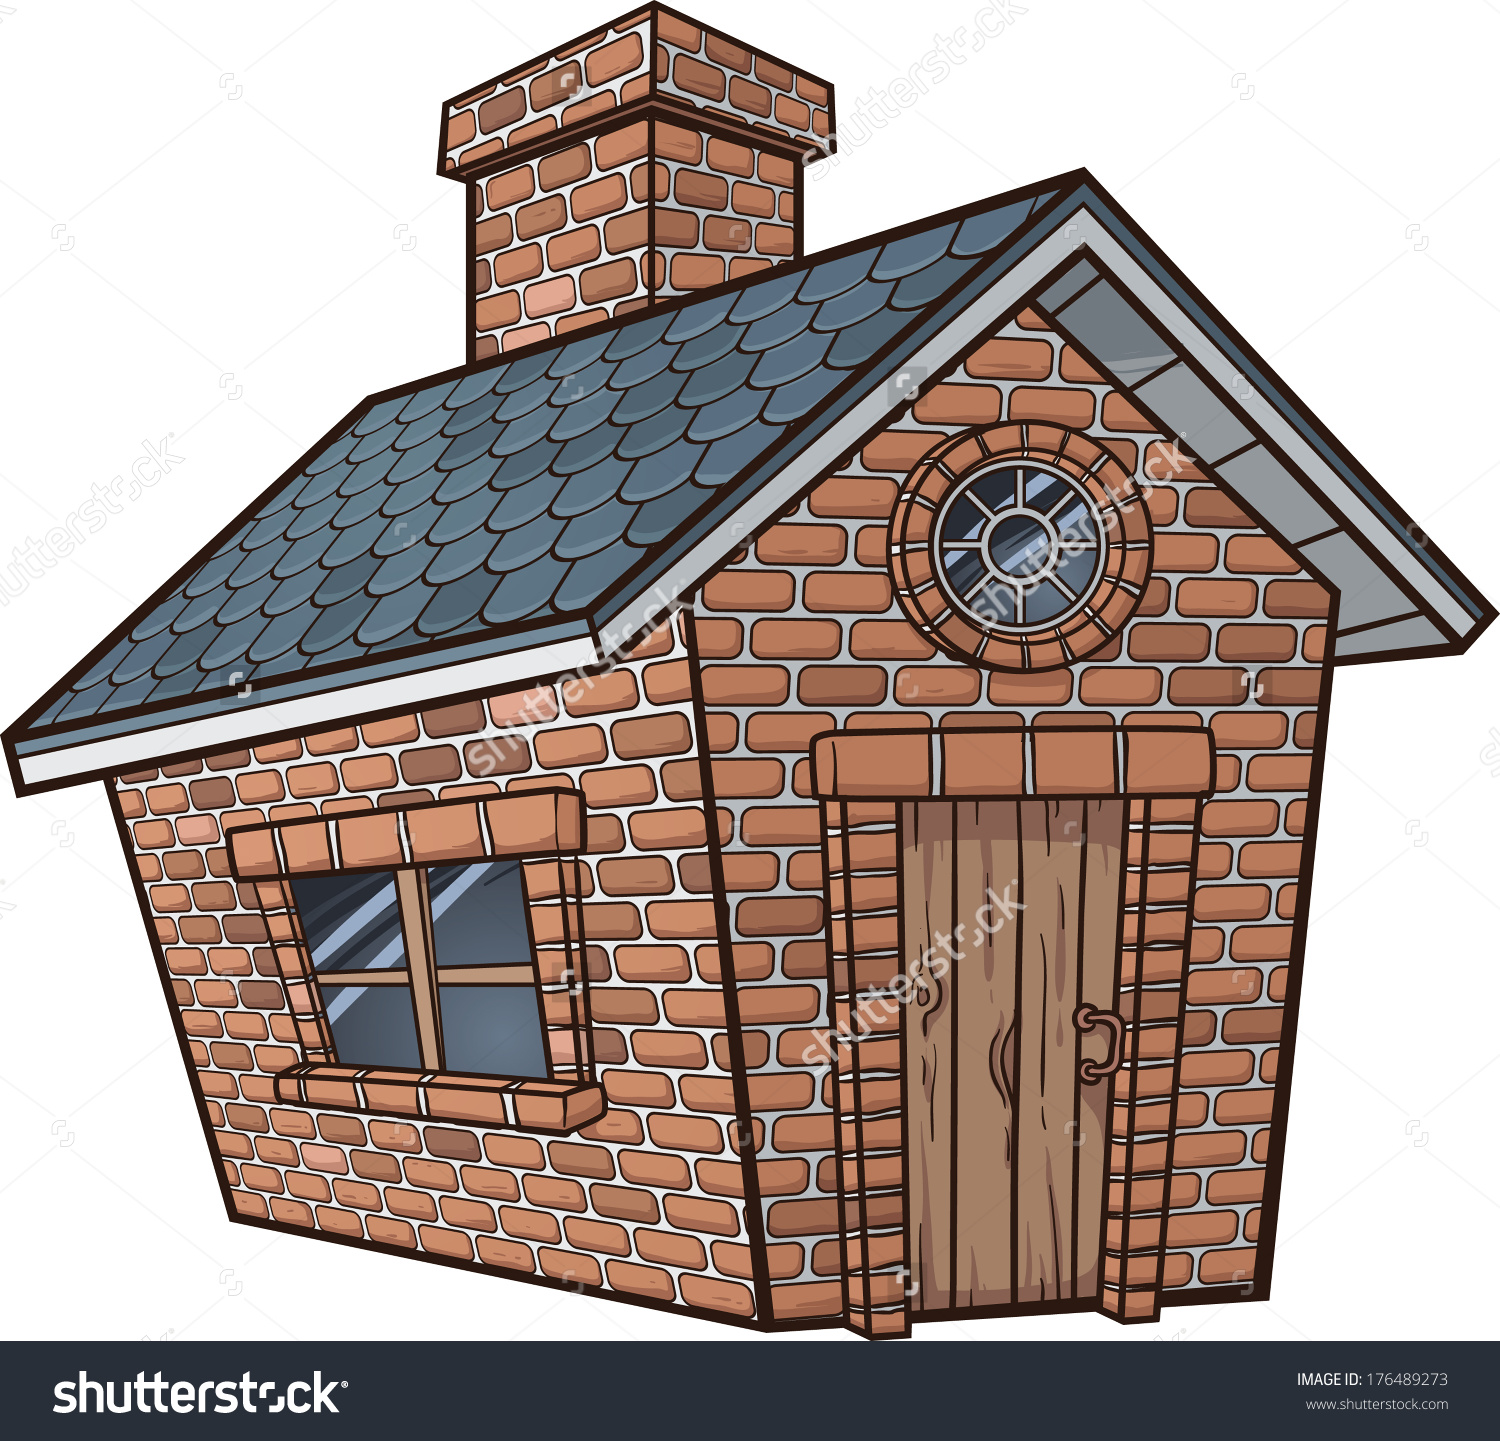 Brick house - csp10932867. Save to a lightbox